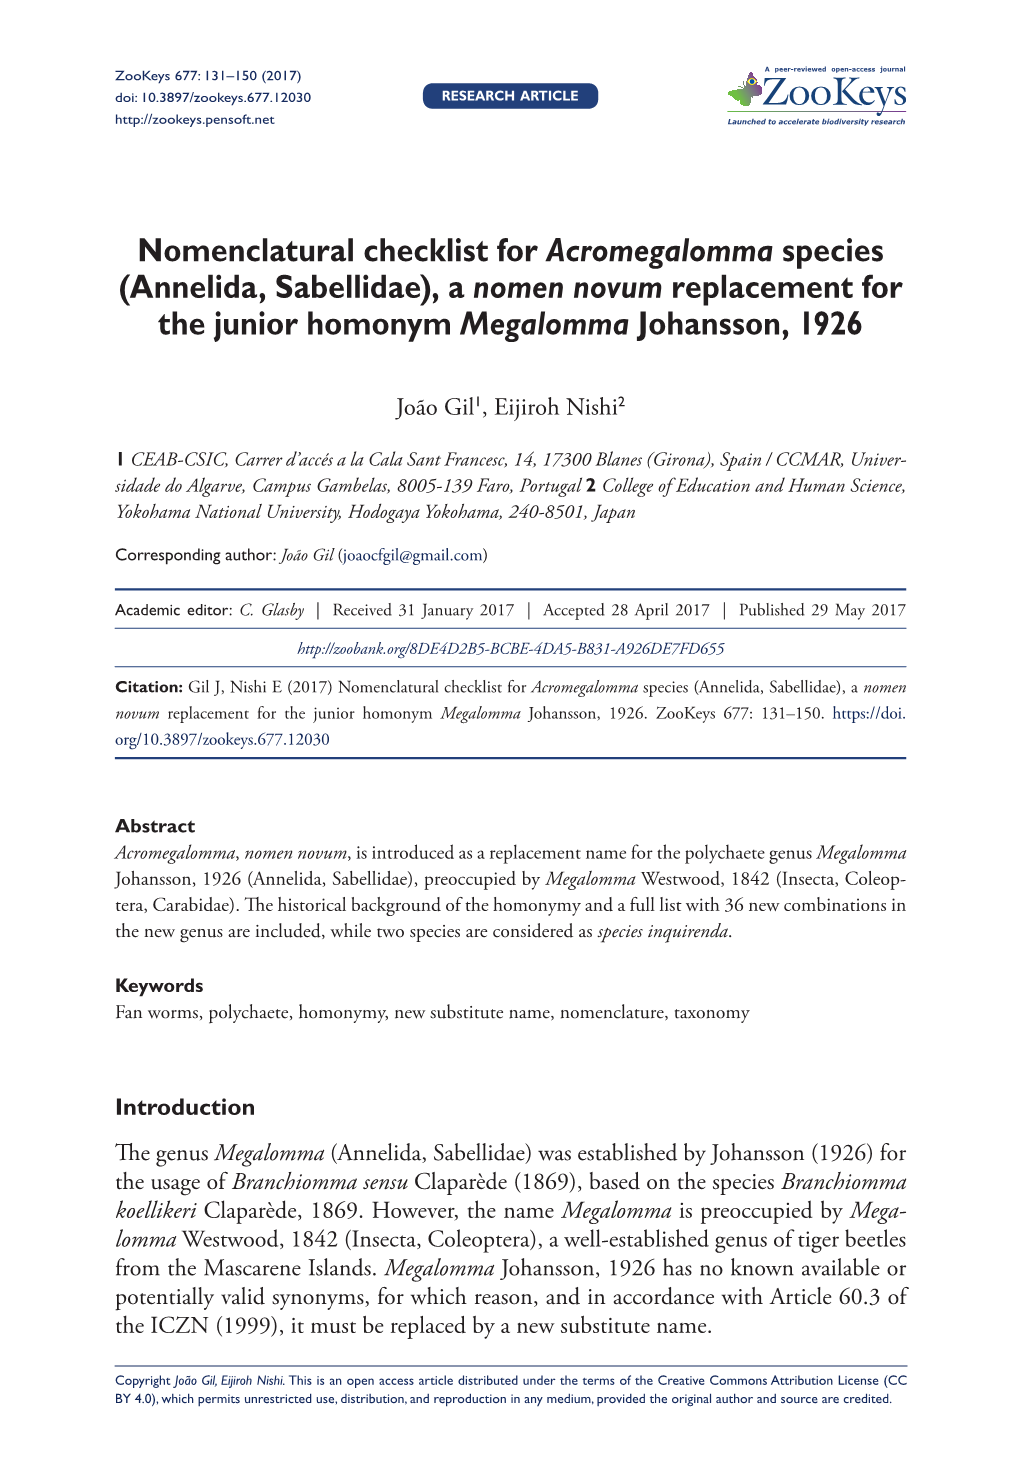 Nomenclatural Checklist for Acromegalomma Species (Annelida, Sabellidae), a Nomen Novum Replacement for the Junior Homonym Megalomma Johansson, 1926